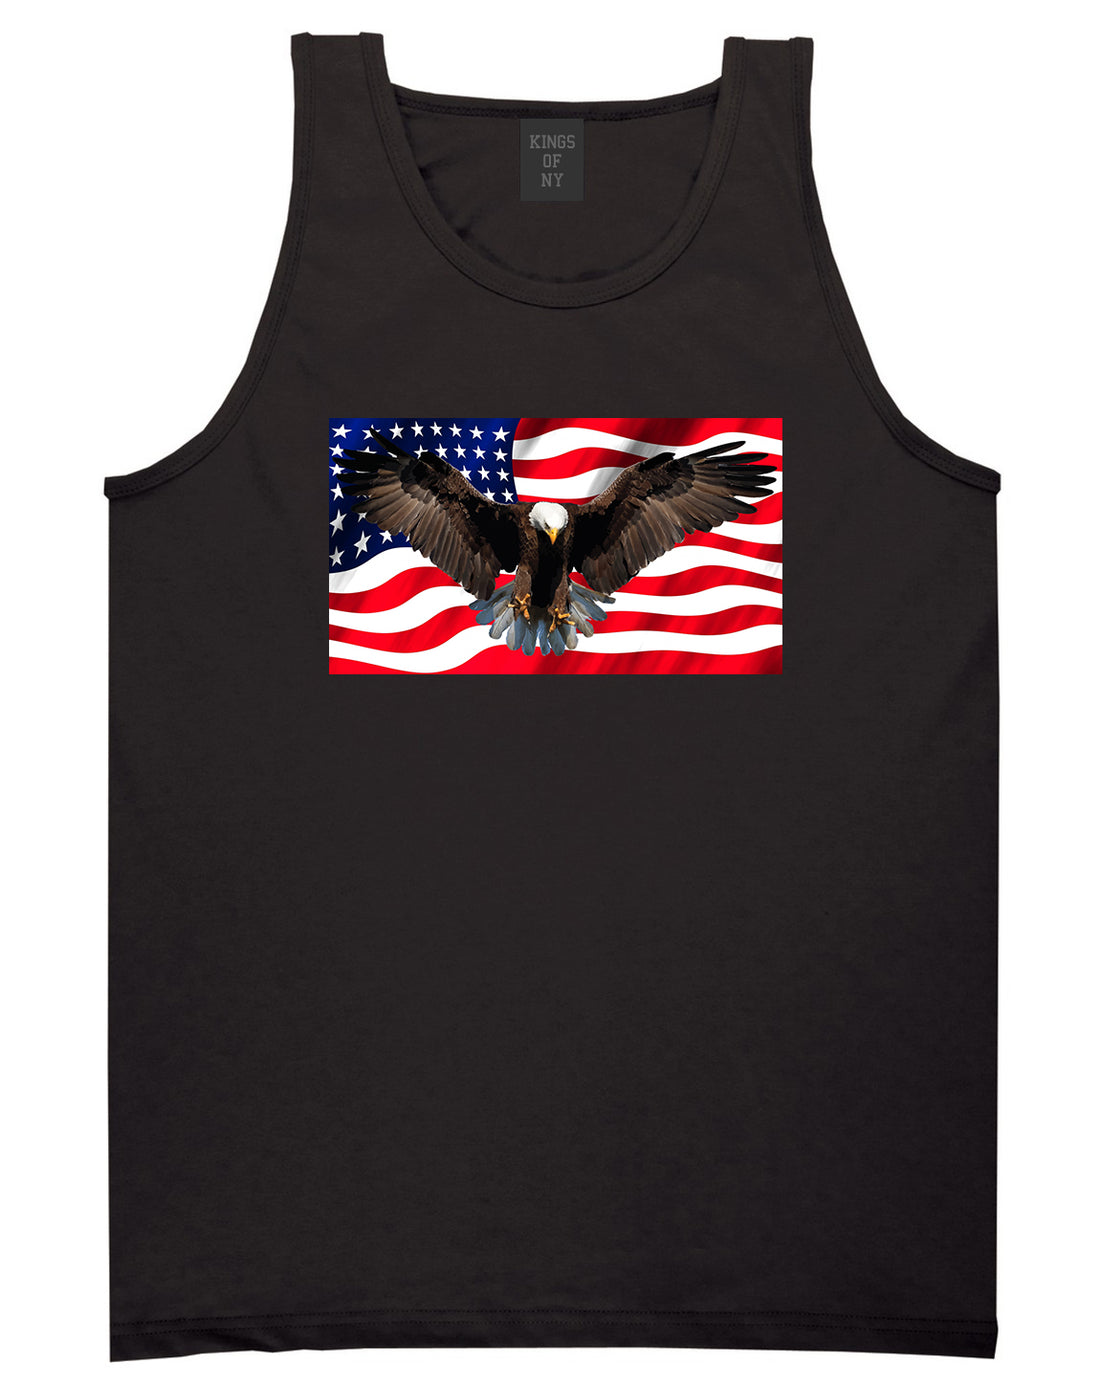 Bald Eagle American Flag Black Tank Top Shirt by Kings Of NY